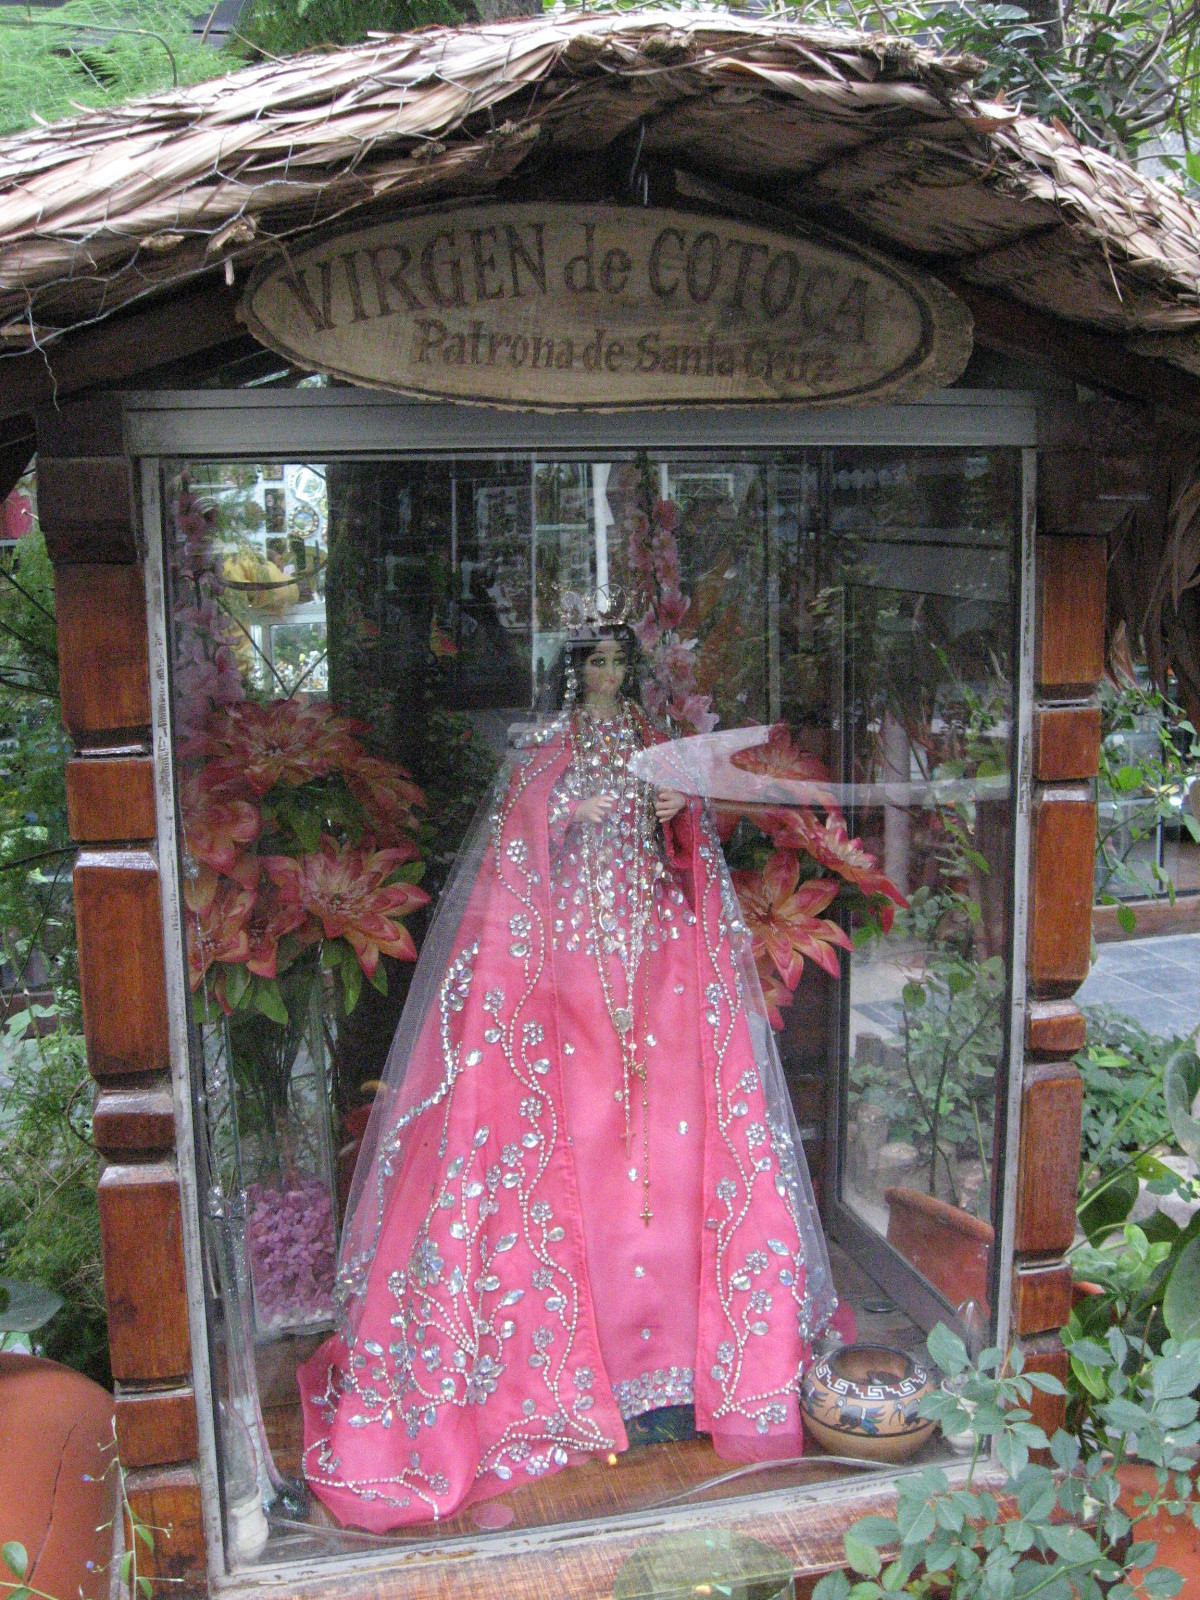 Virgen do Cotoca — Patrona de Santa Cruz (Bolivia)